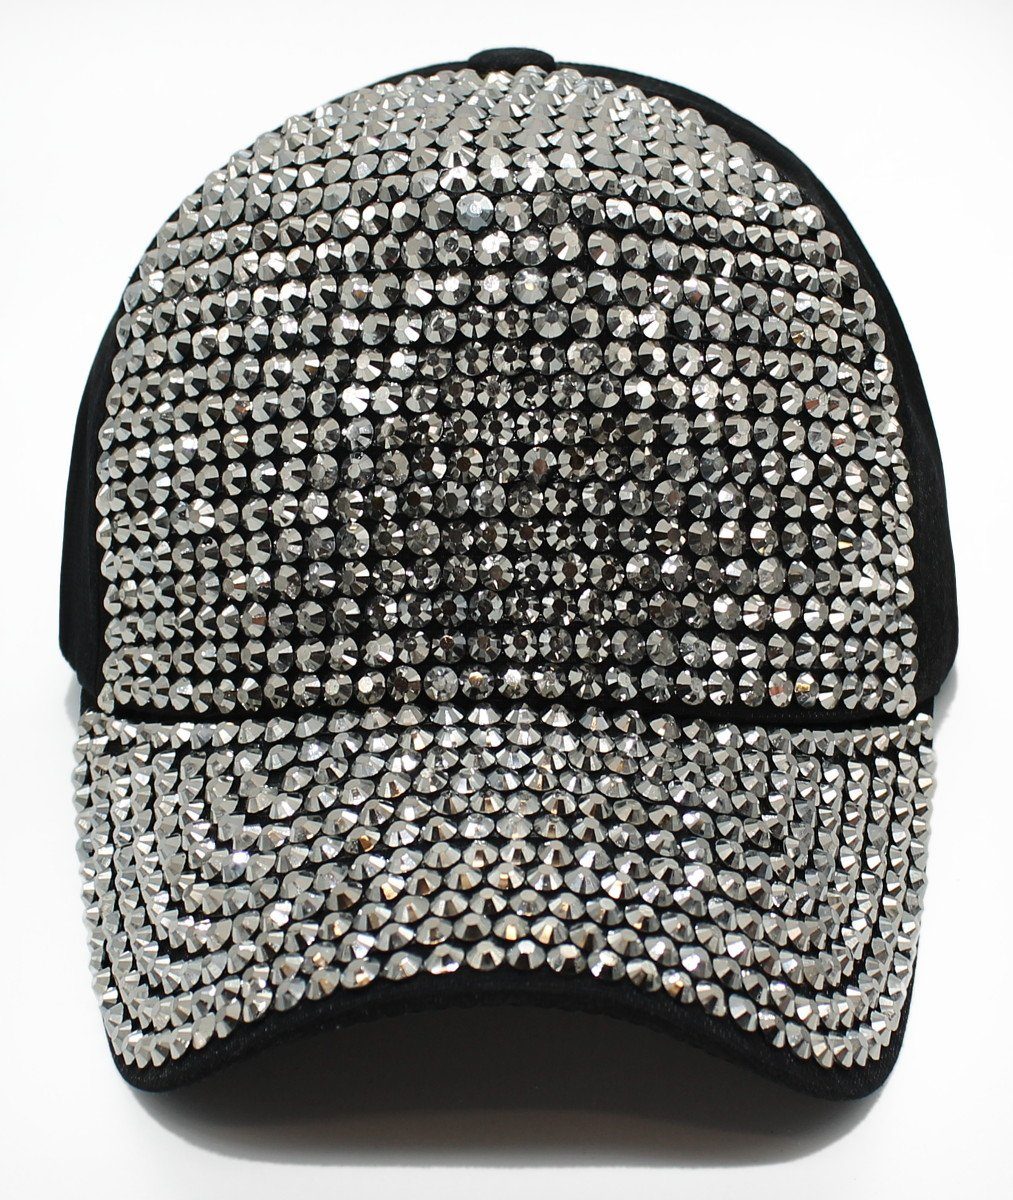 Damen mit Kappe K229-Dunkelmetallic Cap dy_mode Baseballkappe Baseball Schirmmütze Glitzer Strasssteinen